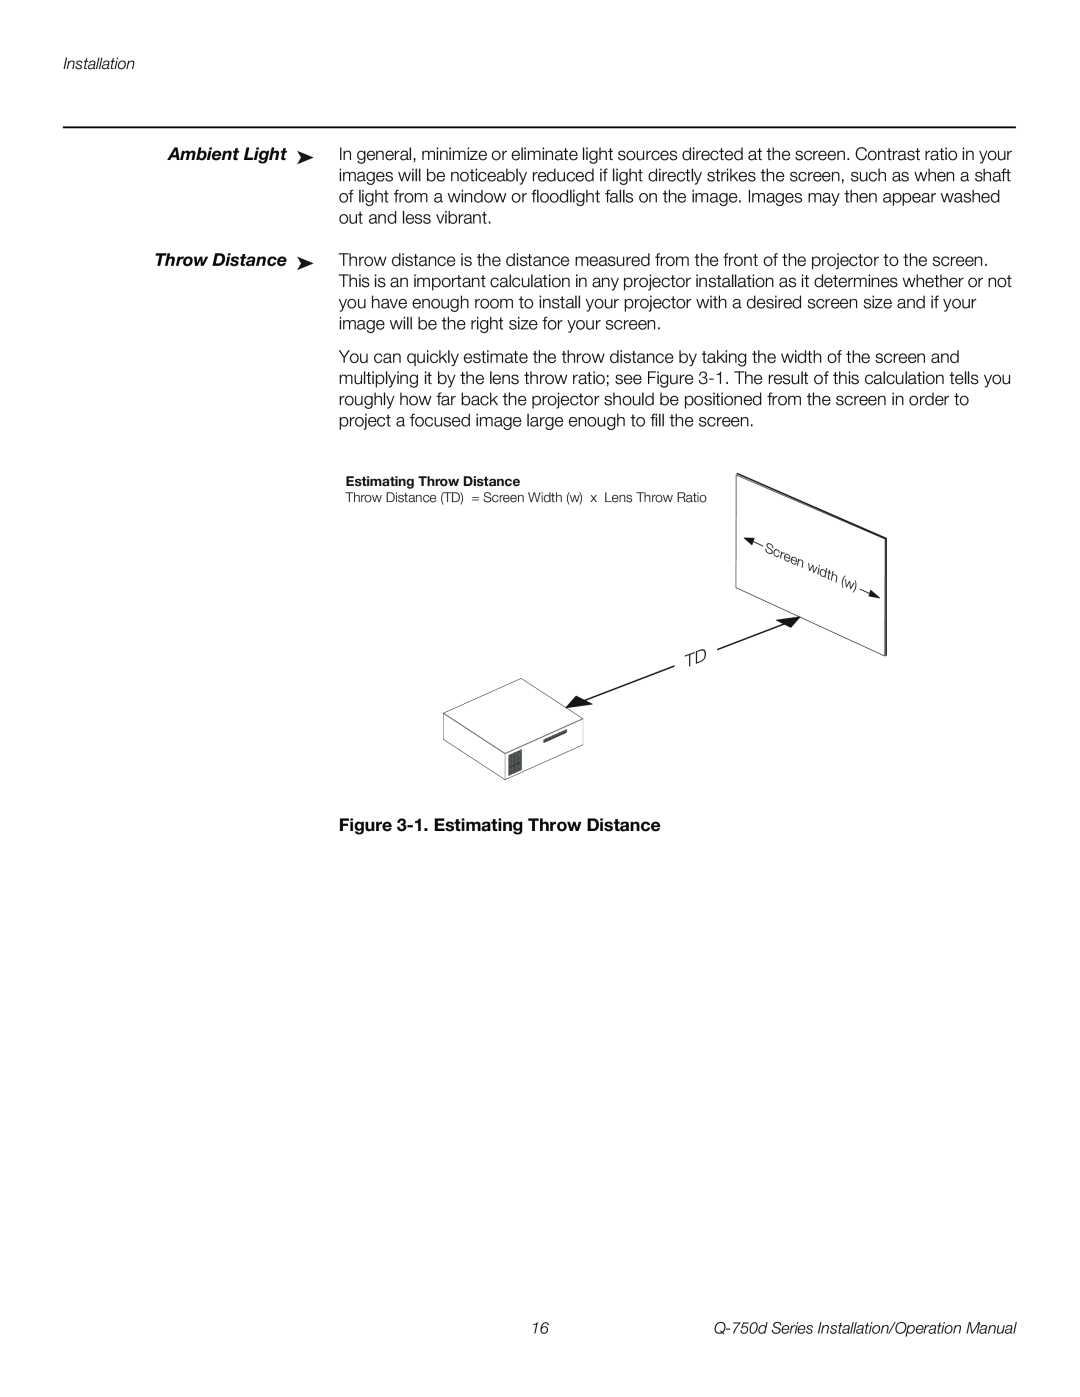 Runco Q-750D operation manual 1.Estimating Throw Distance, Ambient Light 